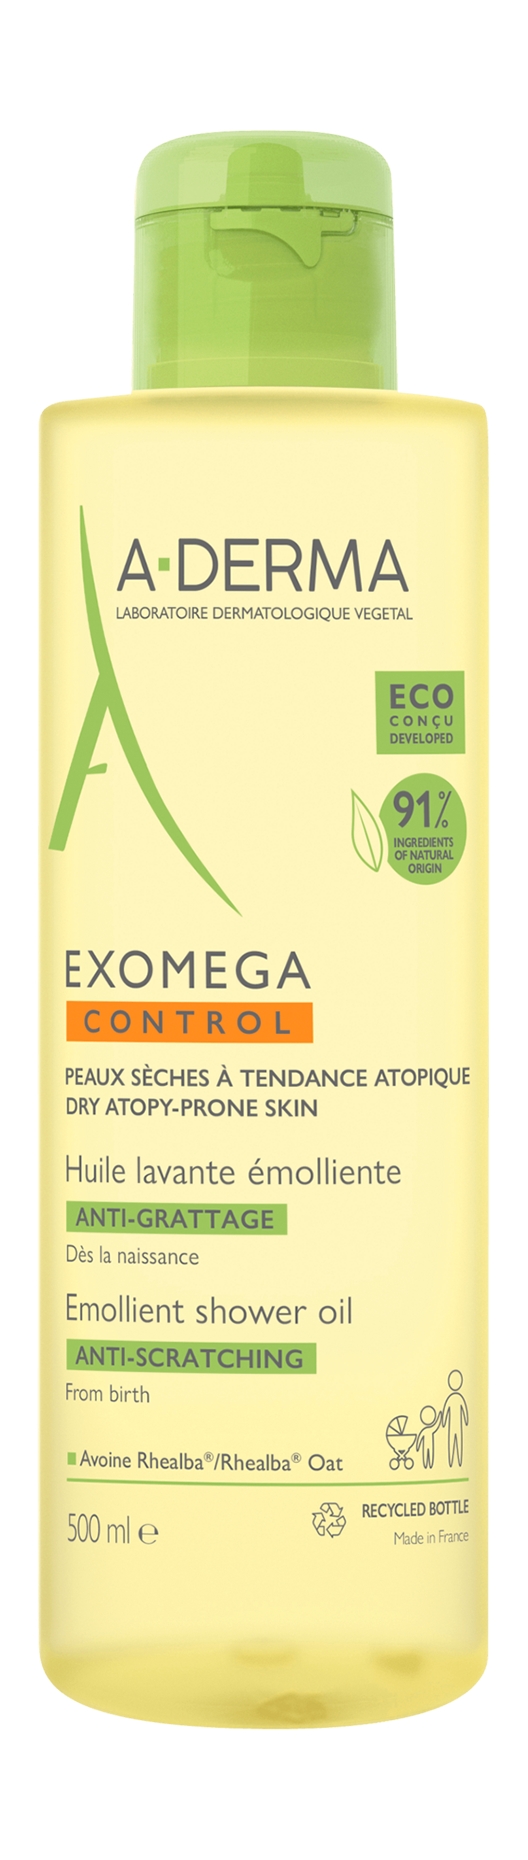 Смягчающее масло для душа A-Derma Exomega Control Emollient Shower Oil, 200мл